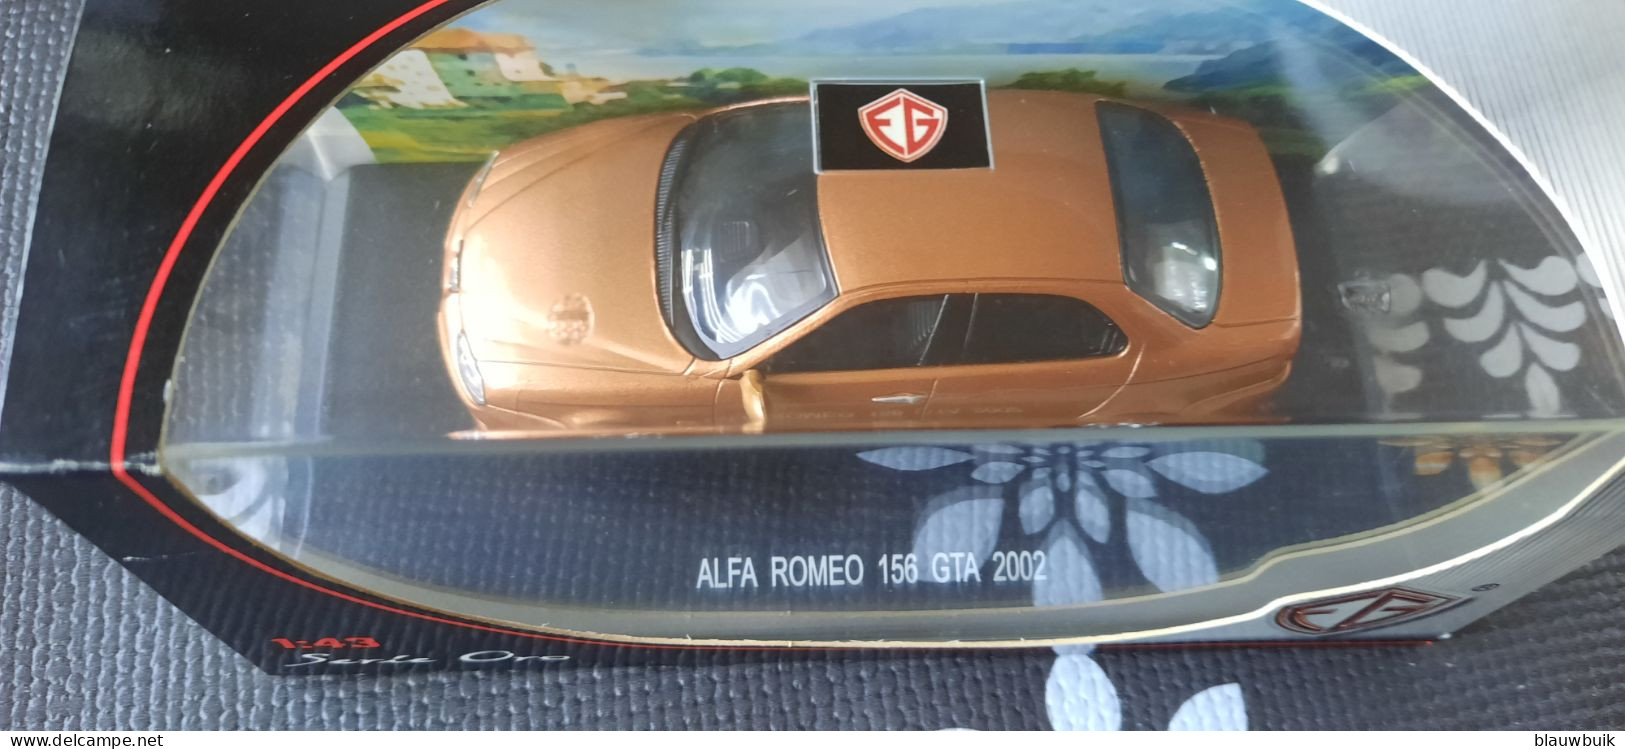 Edison Alfa Romeo 156 GTA 2002 1:43